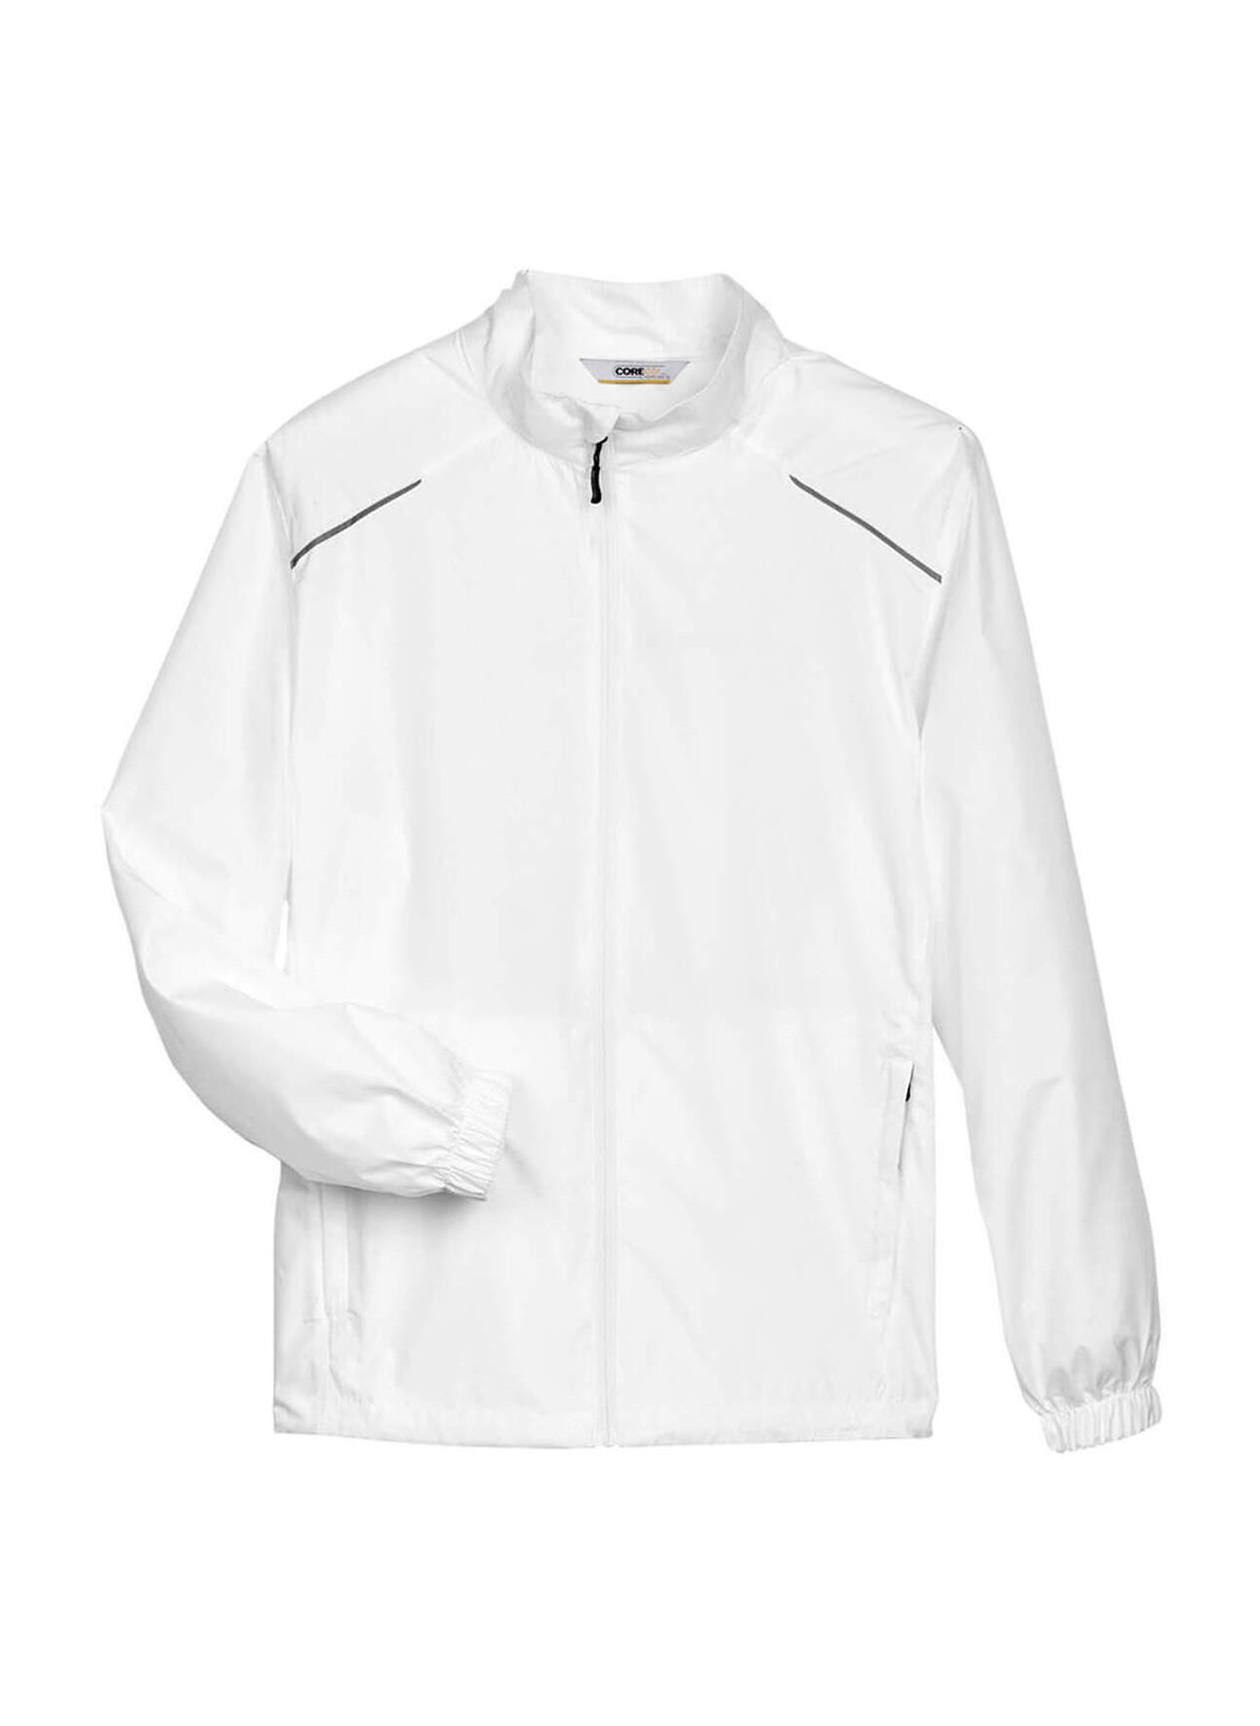 Core 365 Men's White Motivate Unlined Lightweight Jacket